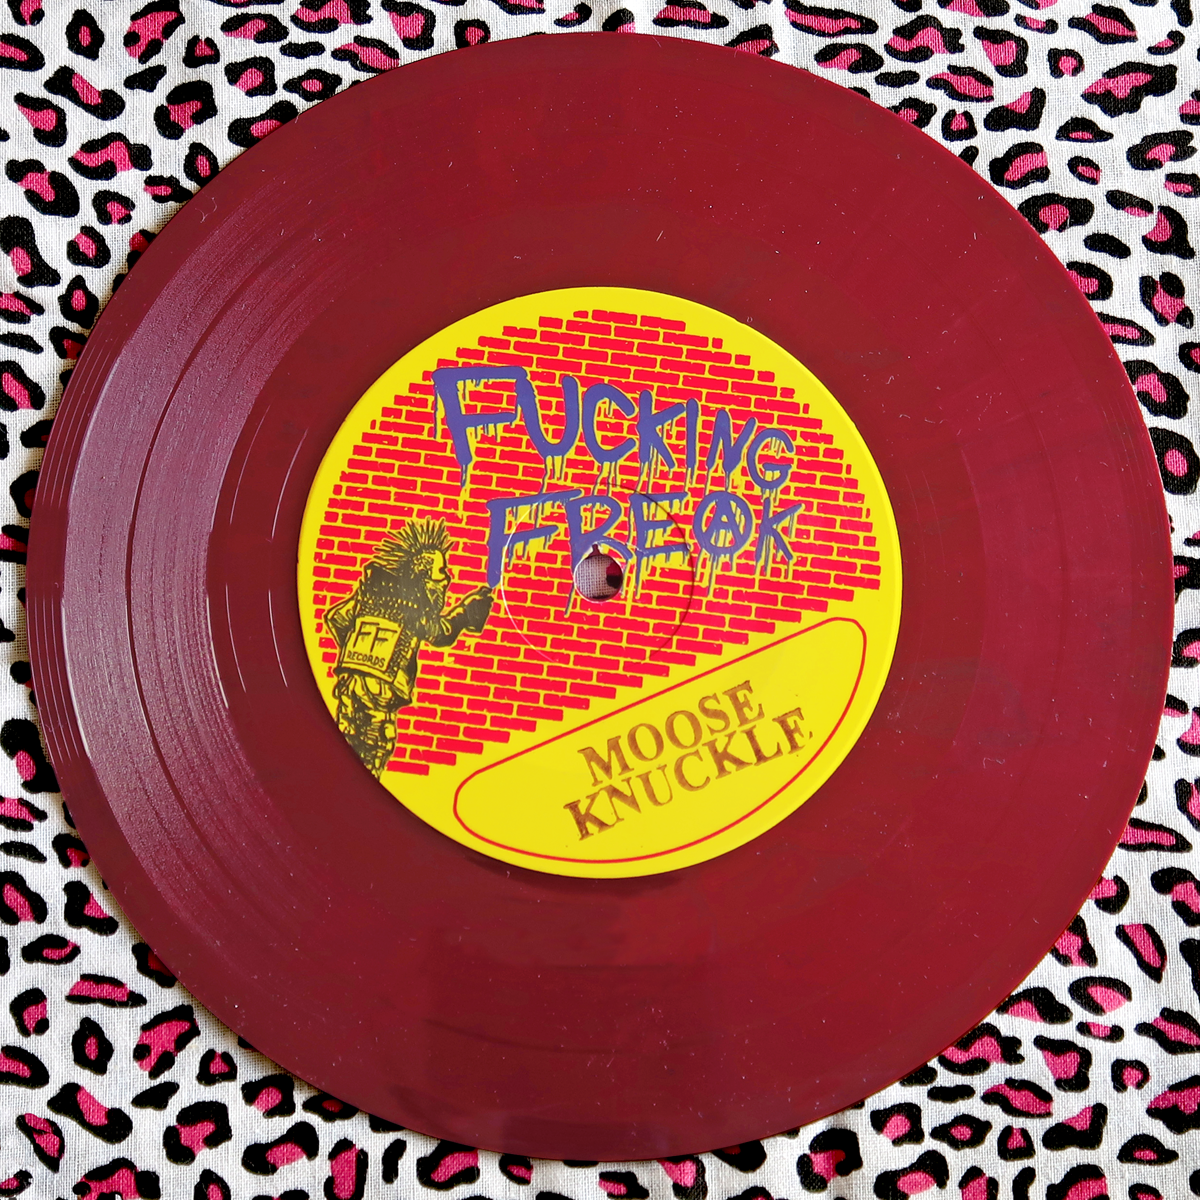 Moose Knuckle / Wrekt!- We Are The Punk Split 7" ~RARE MAGENTA WAX!